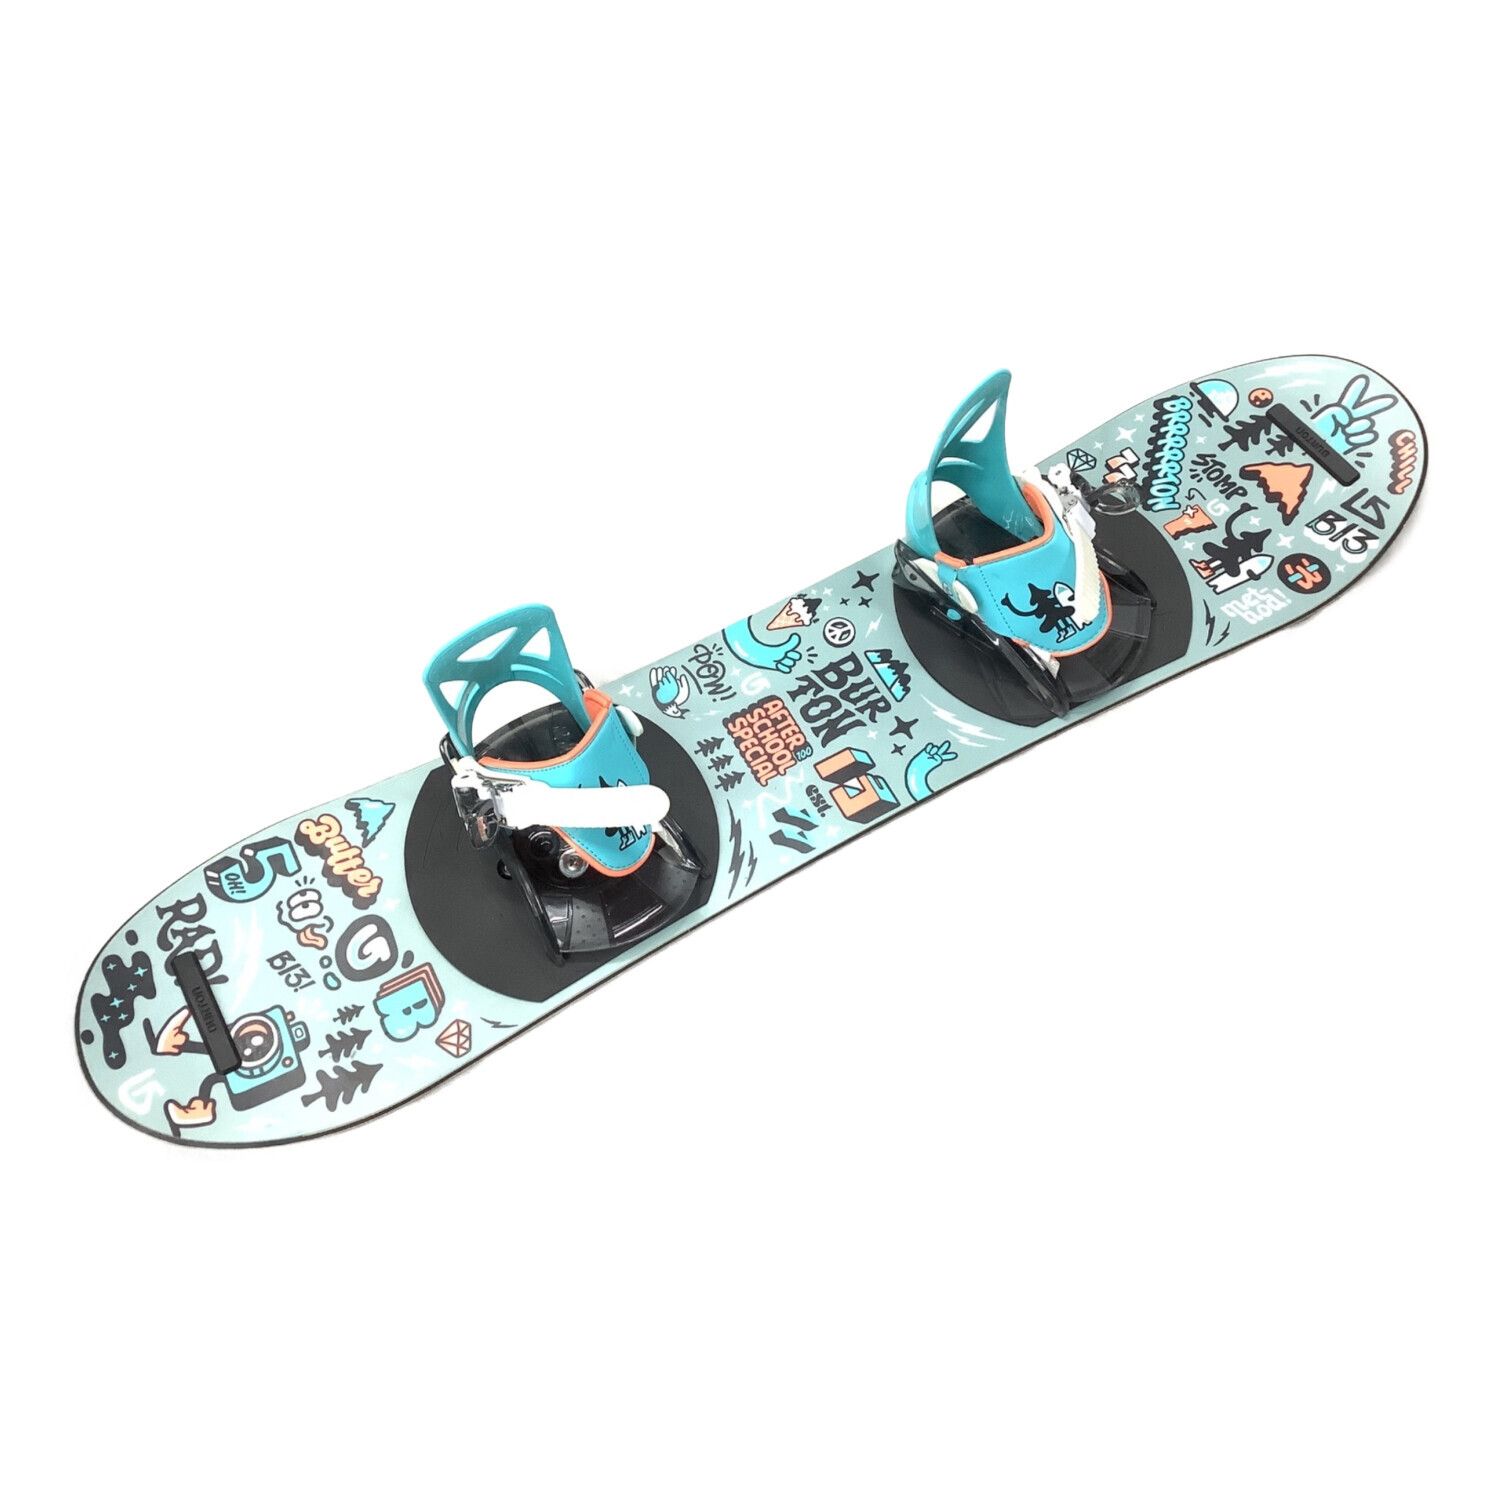 BURTON (バートン) スノーボード 100cm グレー×ブルー 3D ロッカー